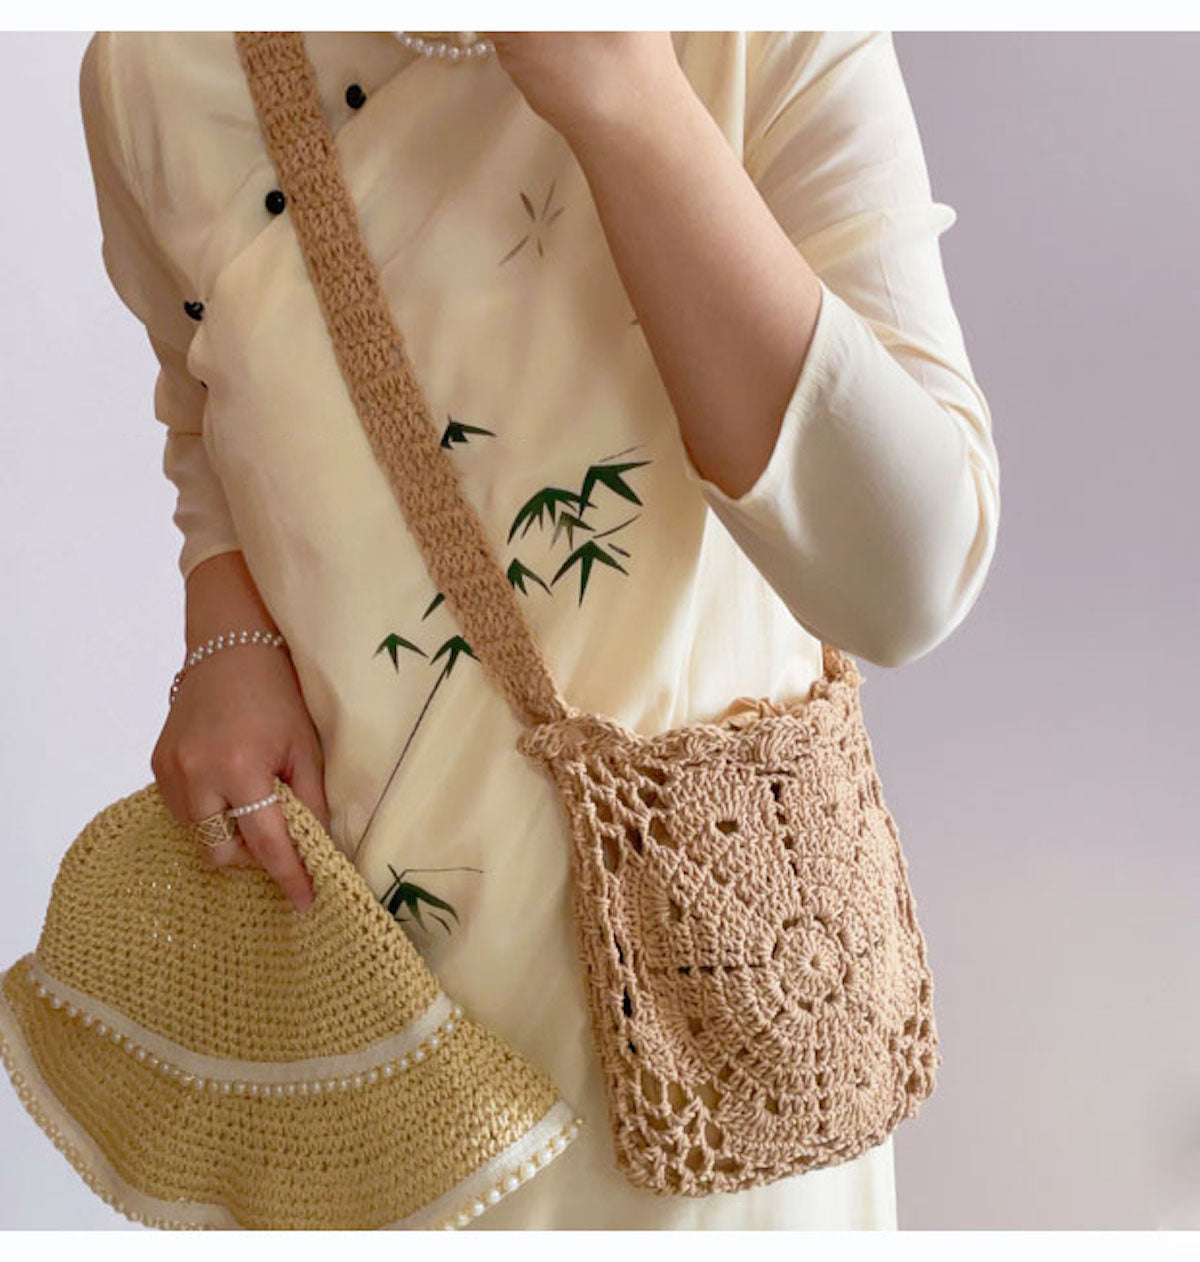 Elena Handbags Small Boho Cotton Knitted Shoulder Bag Green